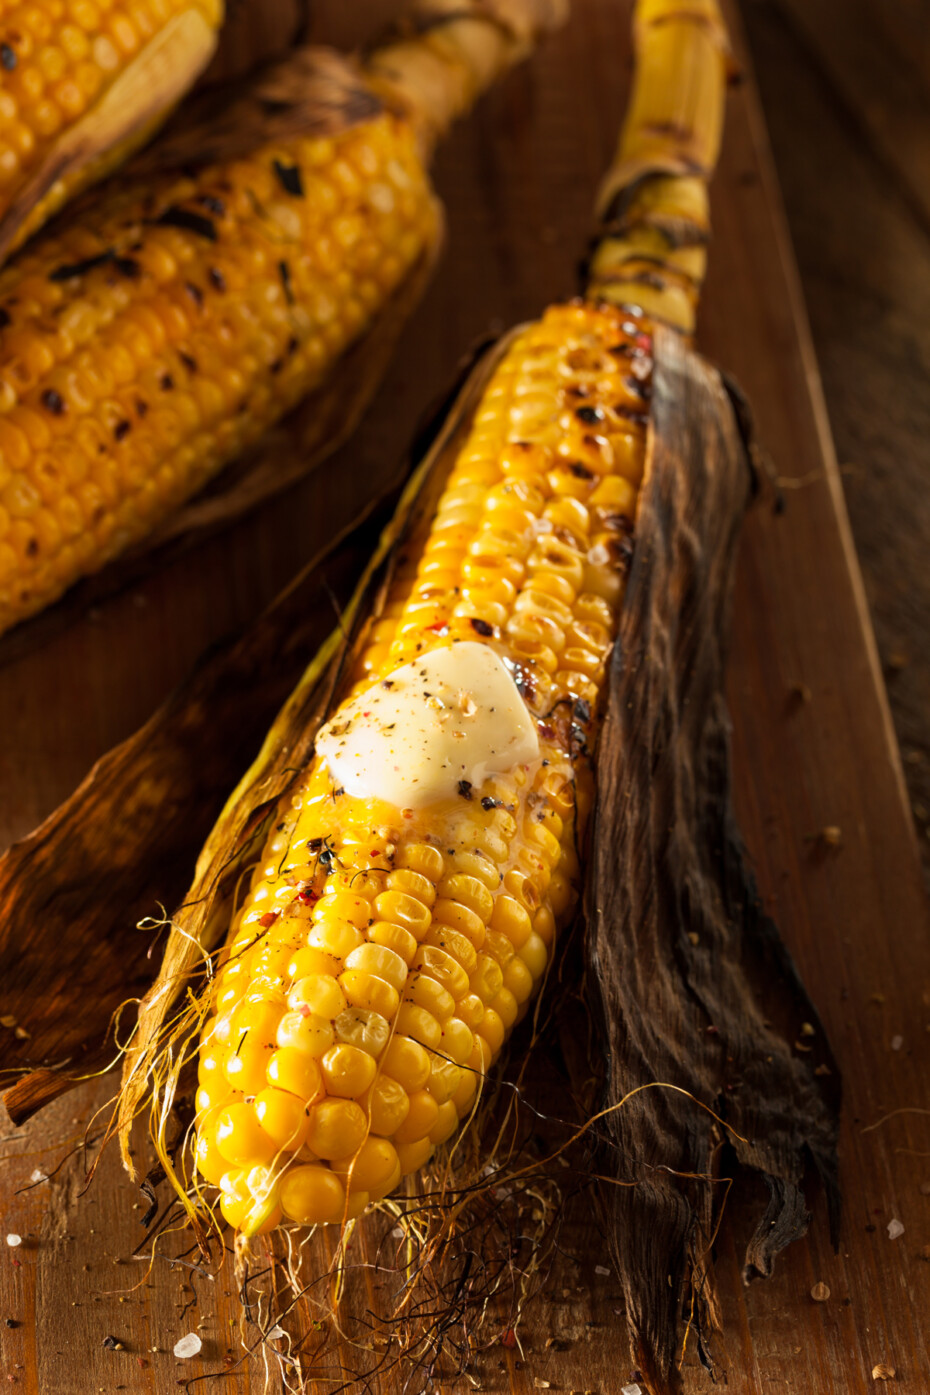 How Long Does Corn Last in the Fridge